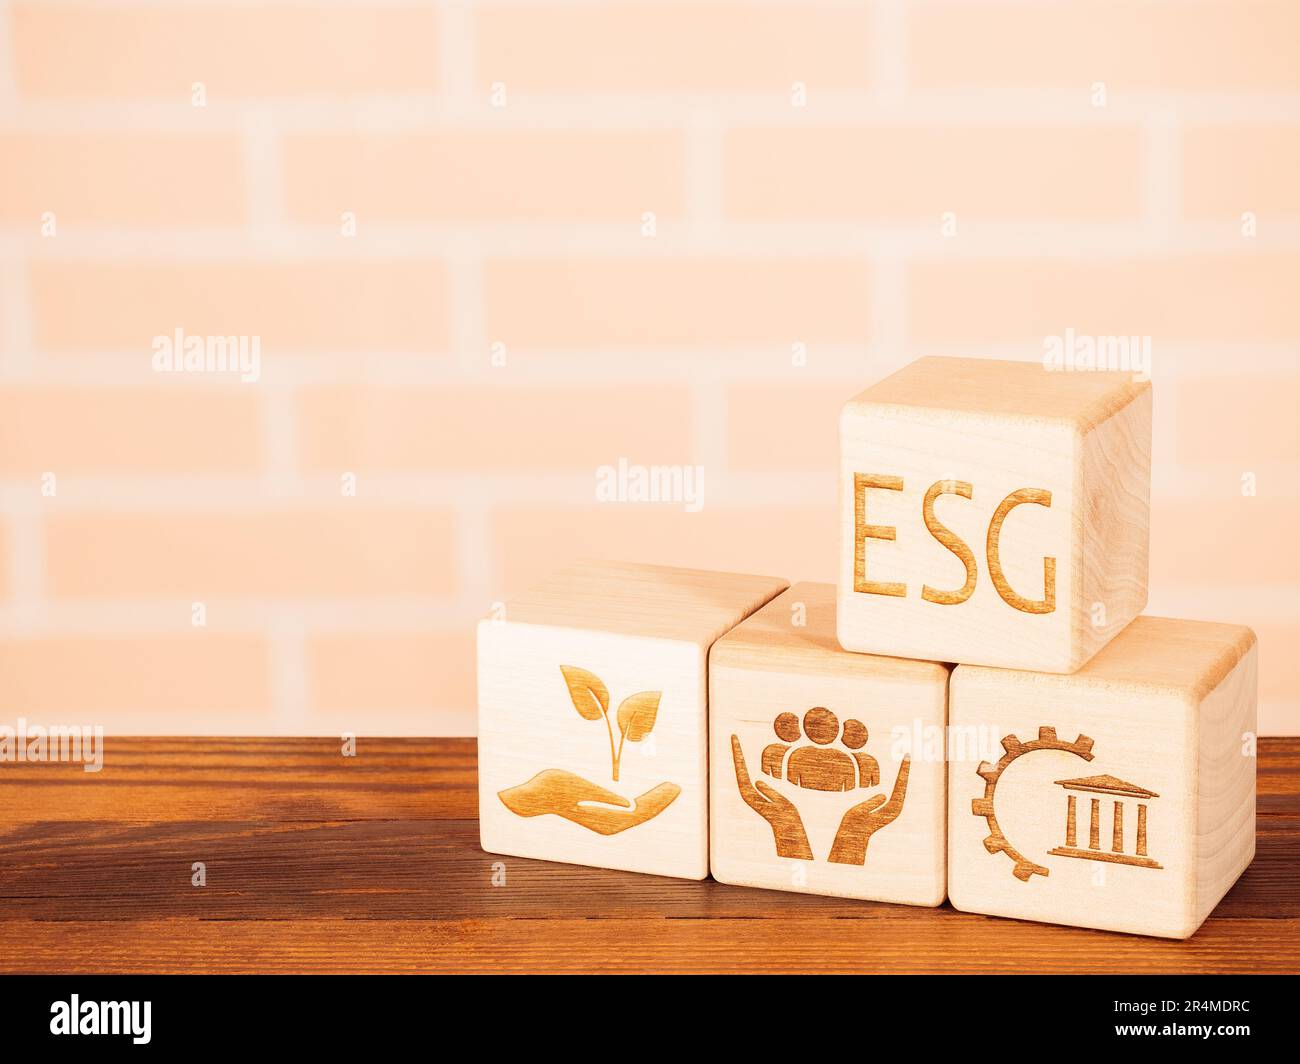 Environmental, Governance and Social symbols on wooden board as concept of ESG principles Stock Photo